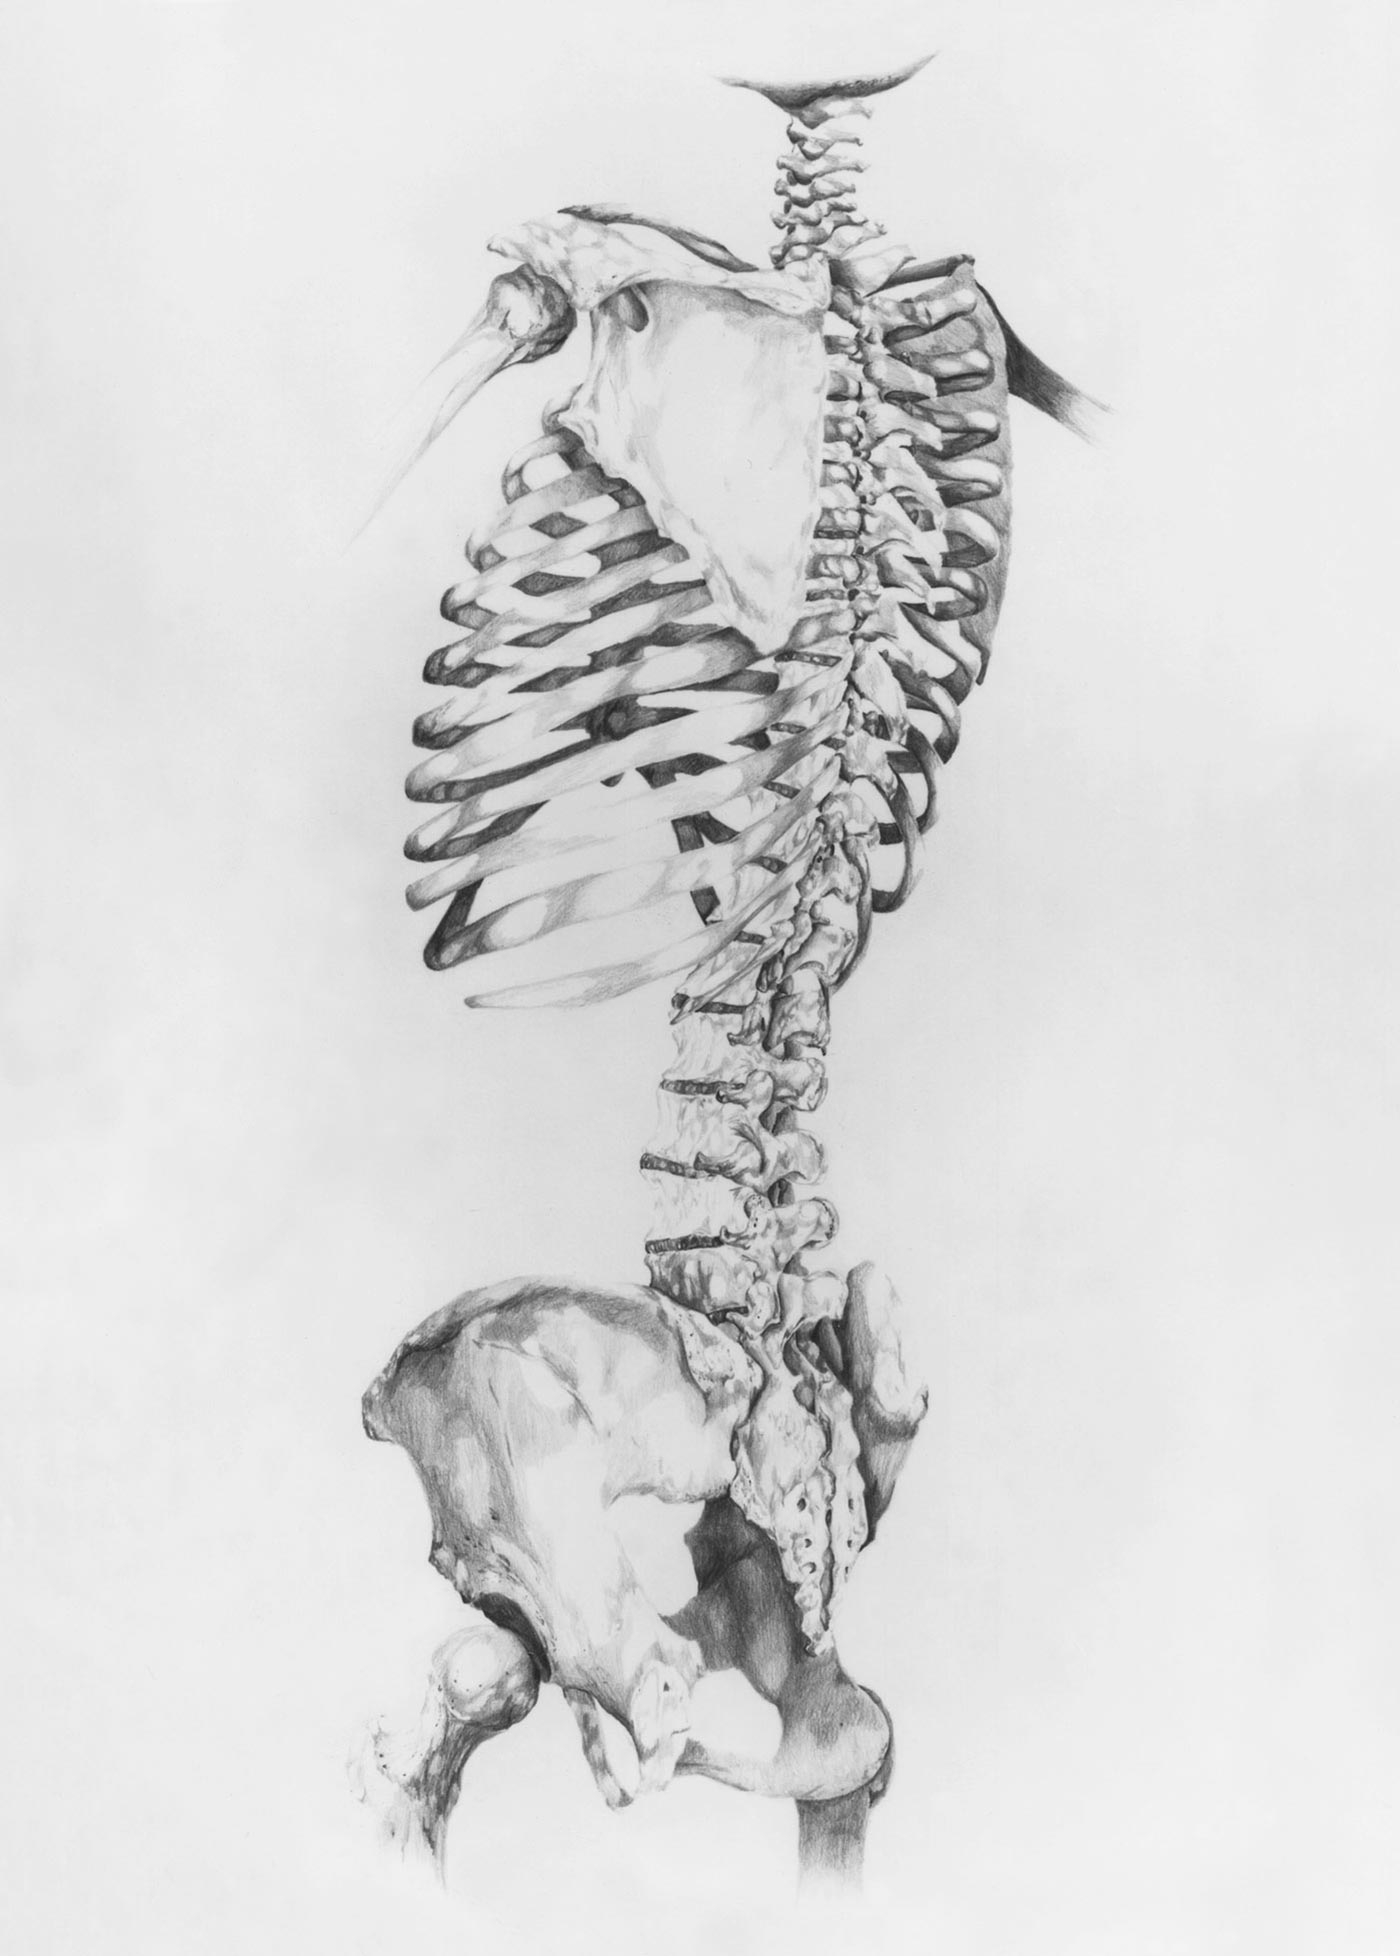 Body 1 - Anatomy Sketch